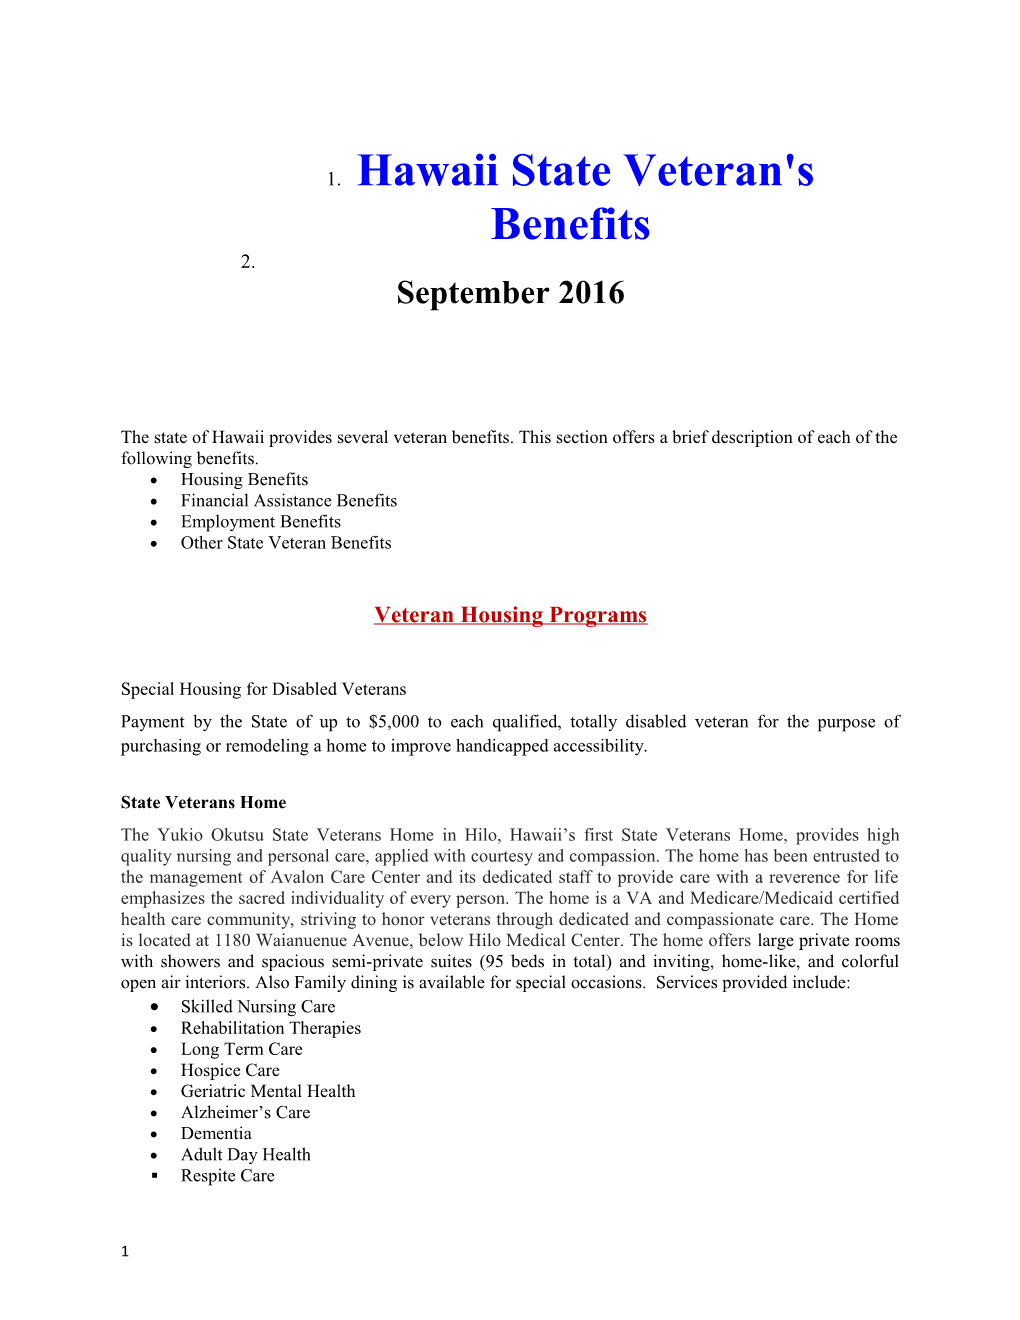 Hawaii State Veteran's Benefits